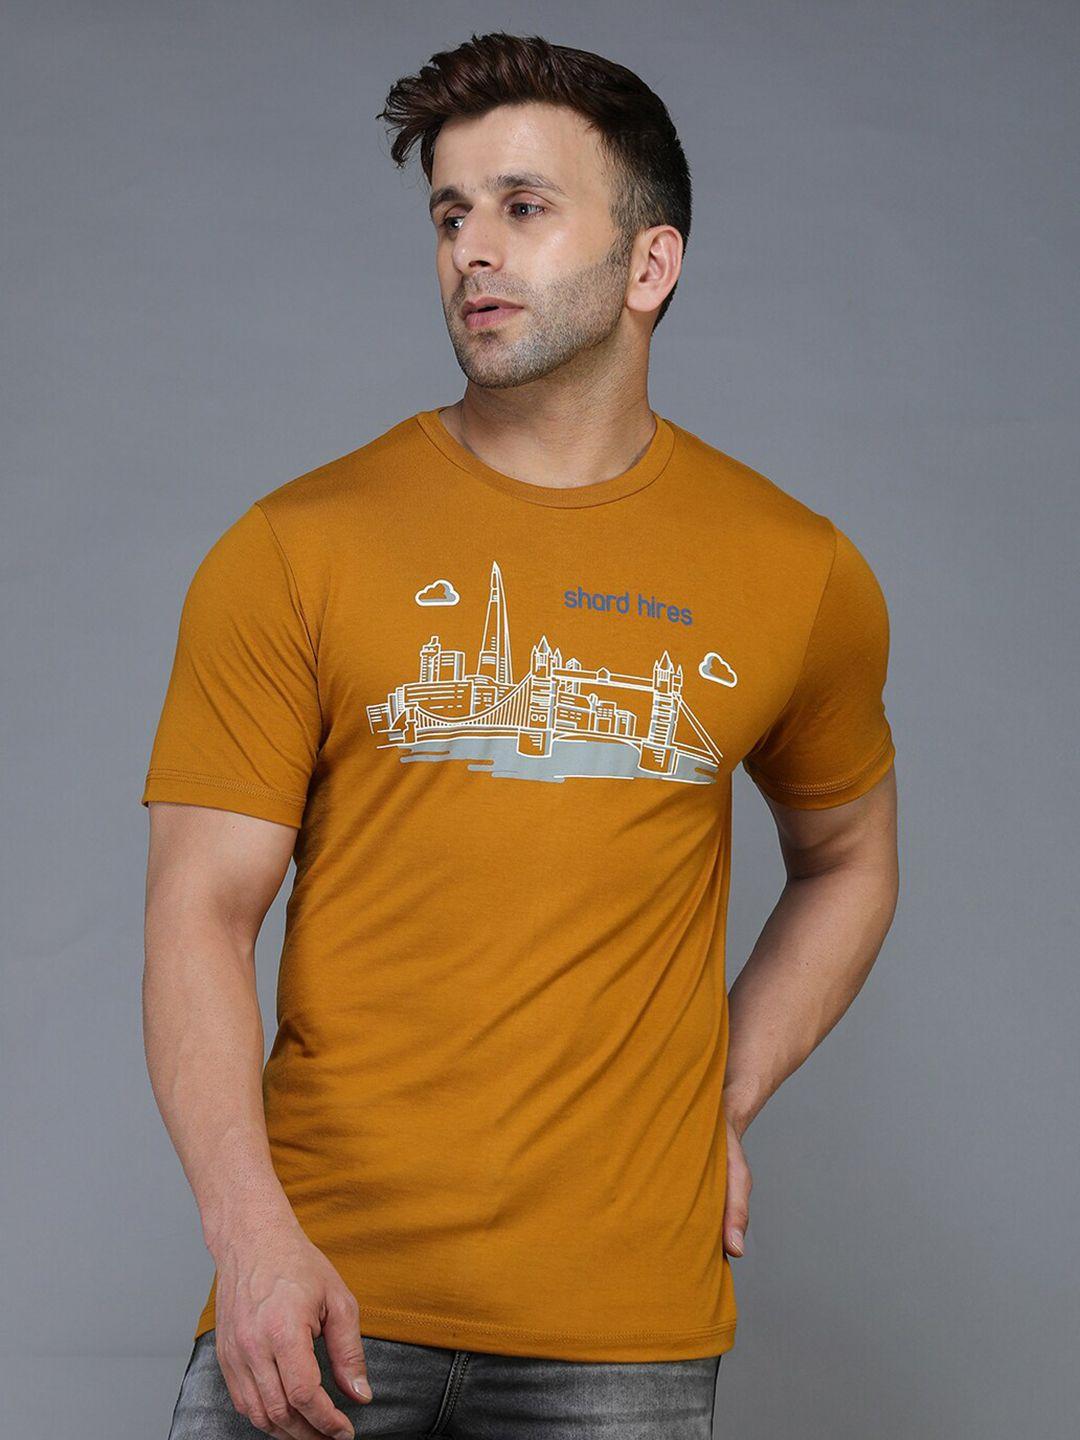 tqs-men-mustard-yellow-typography-printed-applique-t-shirt